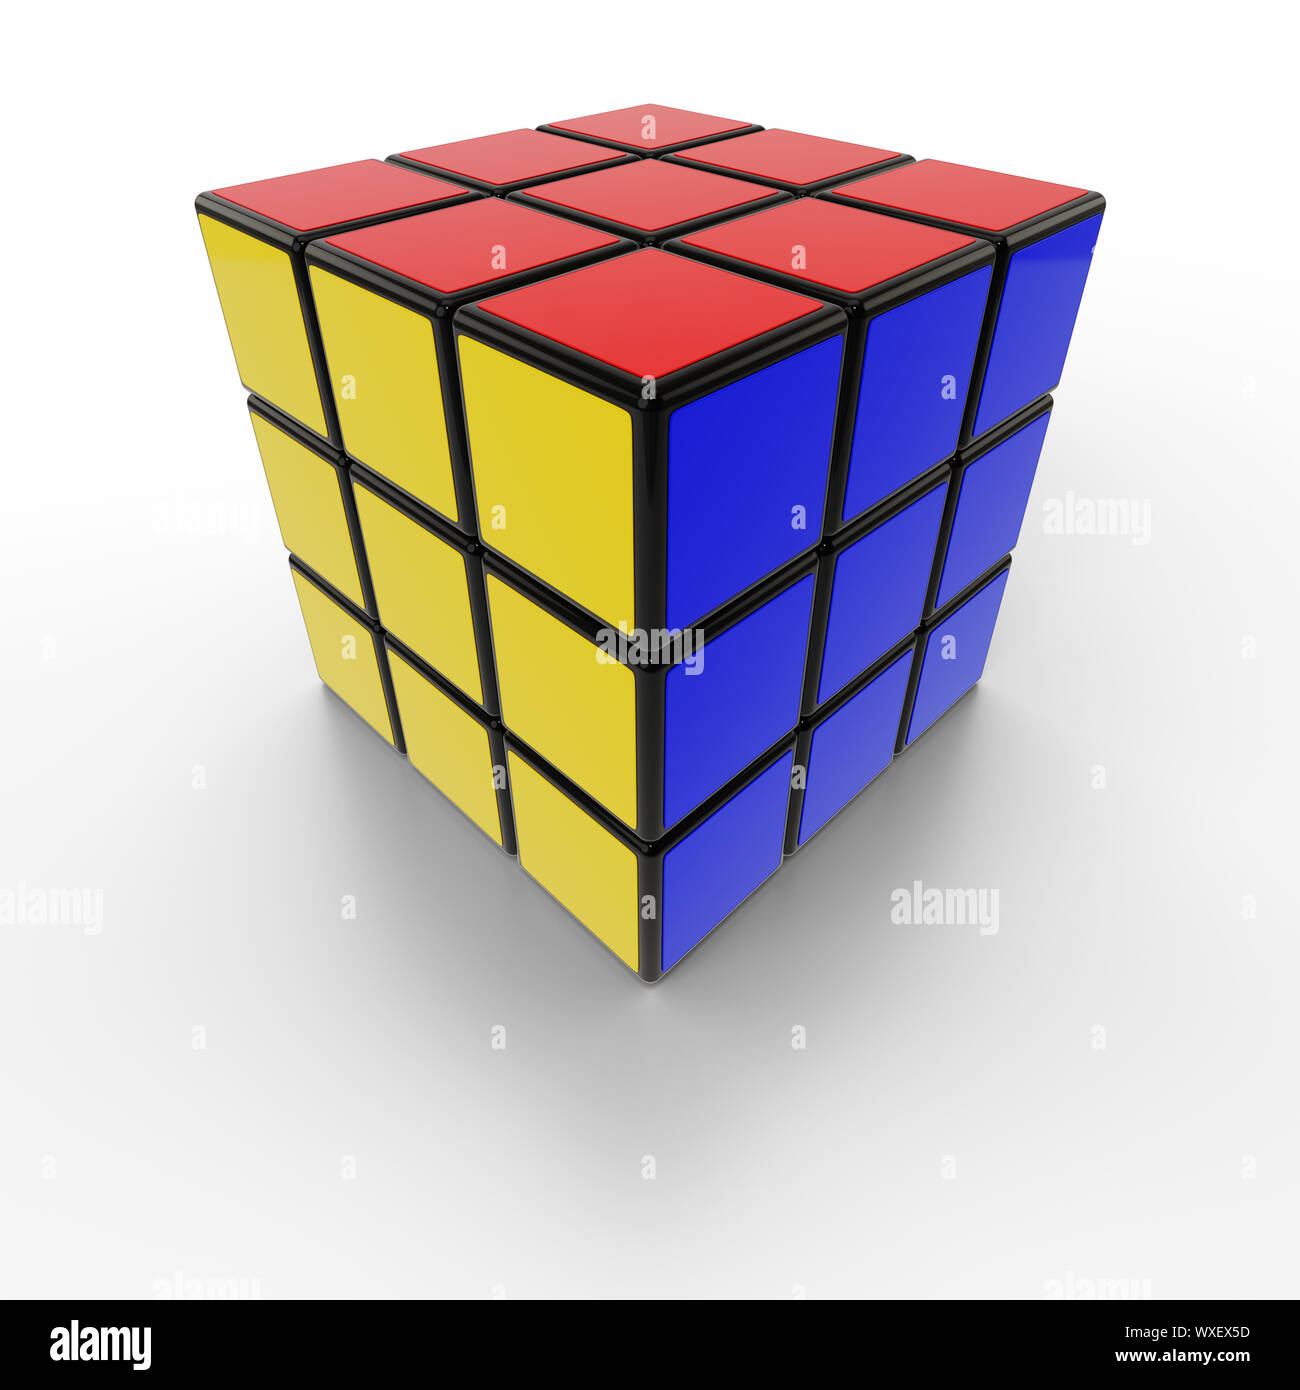 dice cube puzzle solution symbol Stock Photo - Alamy